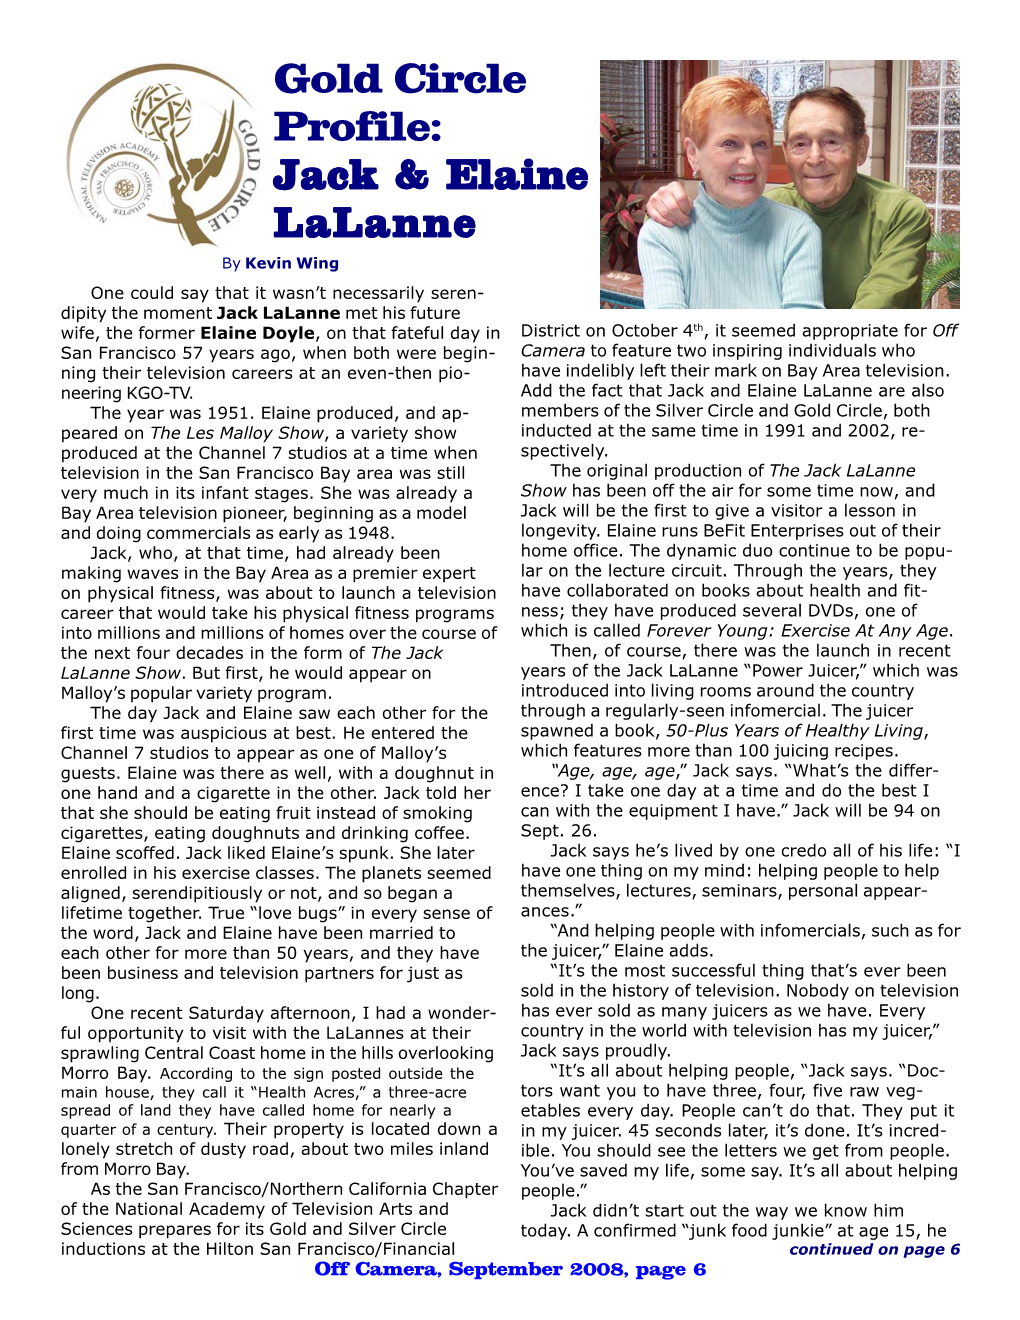 Gold Circle Profile: Jack & Elaine Lalanne